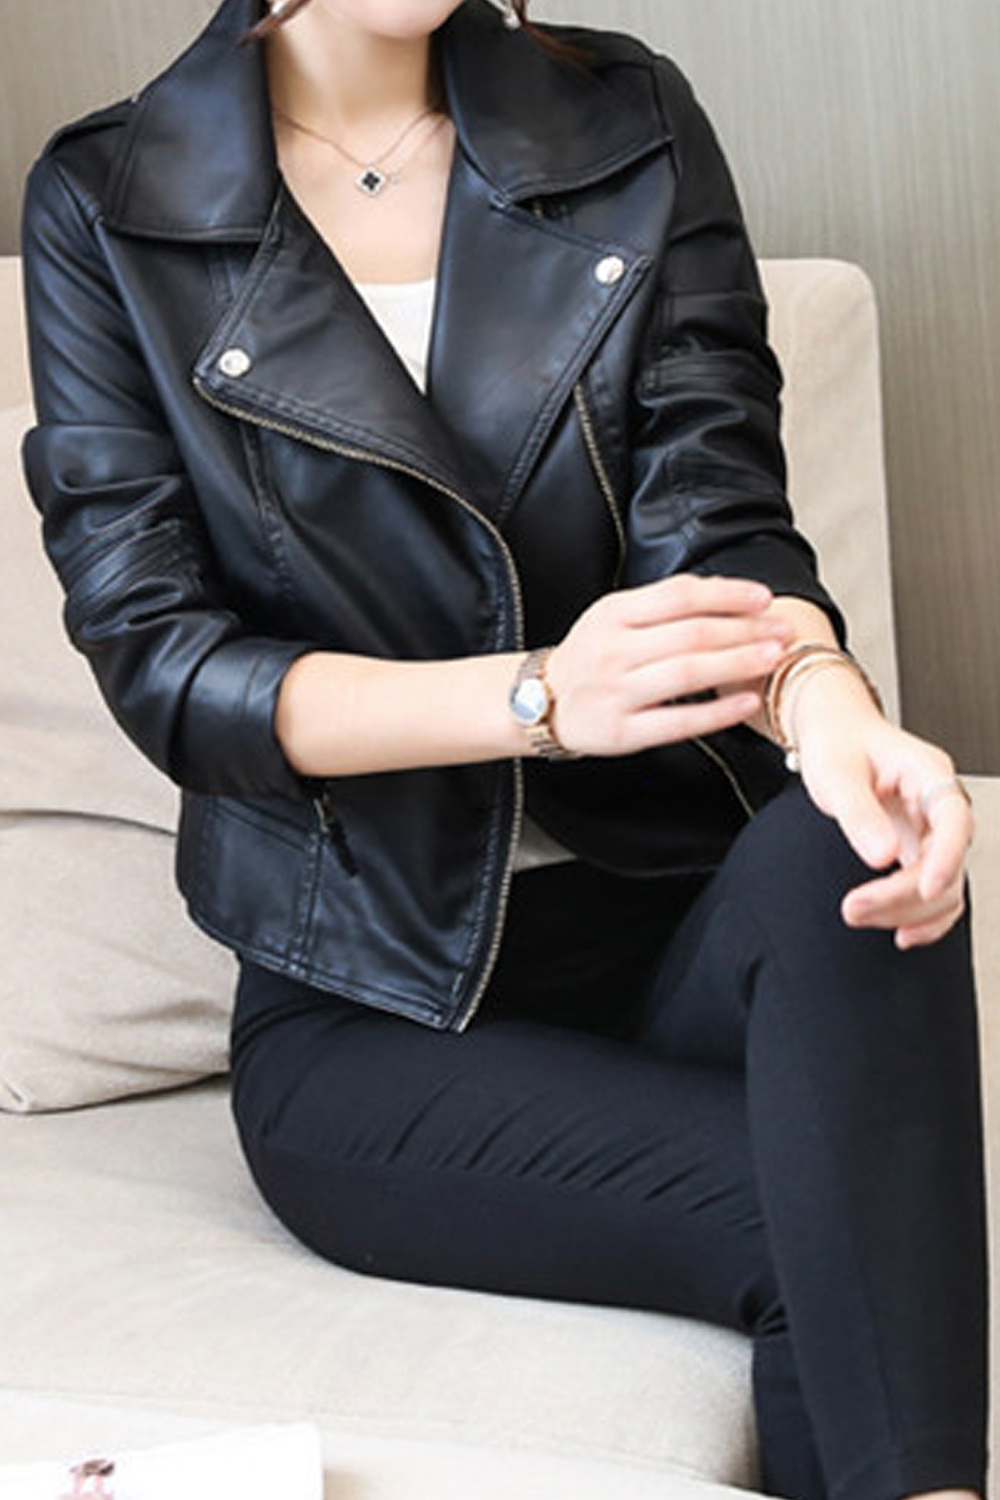 Unomatch Women Elegant Regular Fit Style Long Sleeve Solid Pattern Winter Leather Jacket